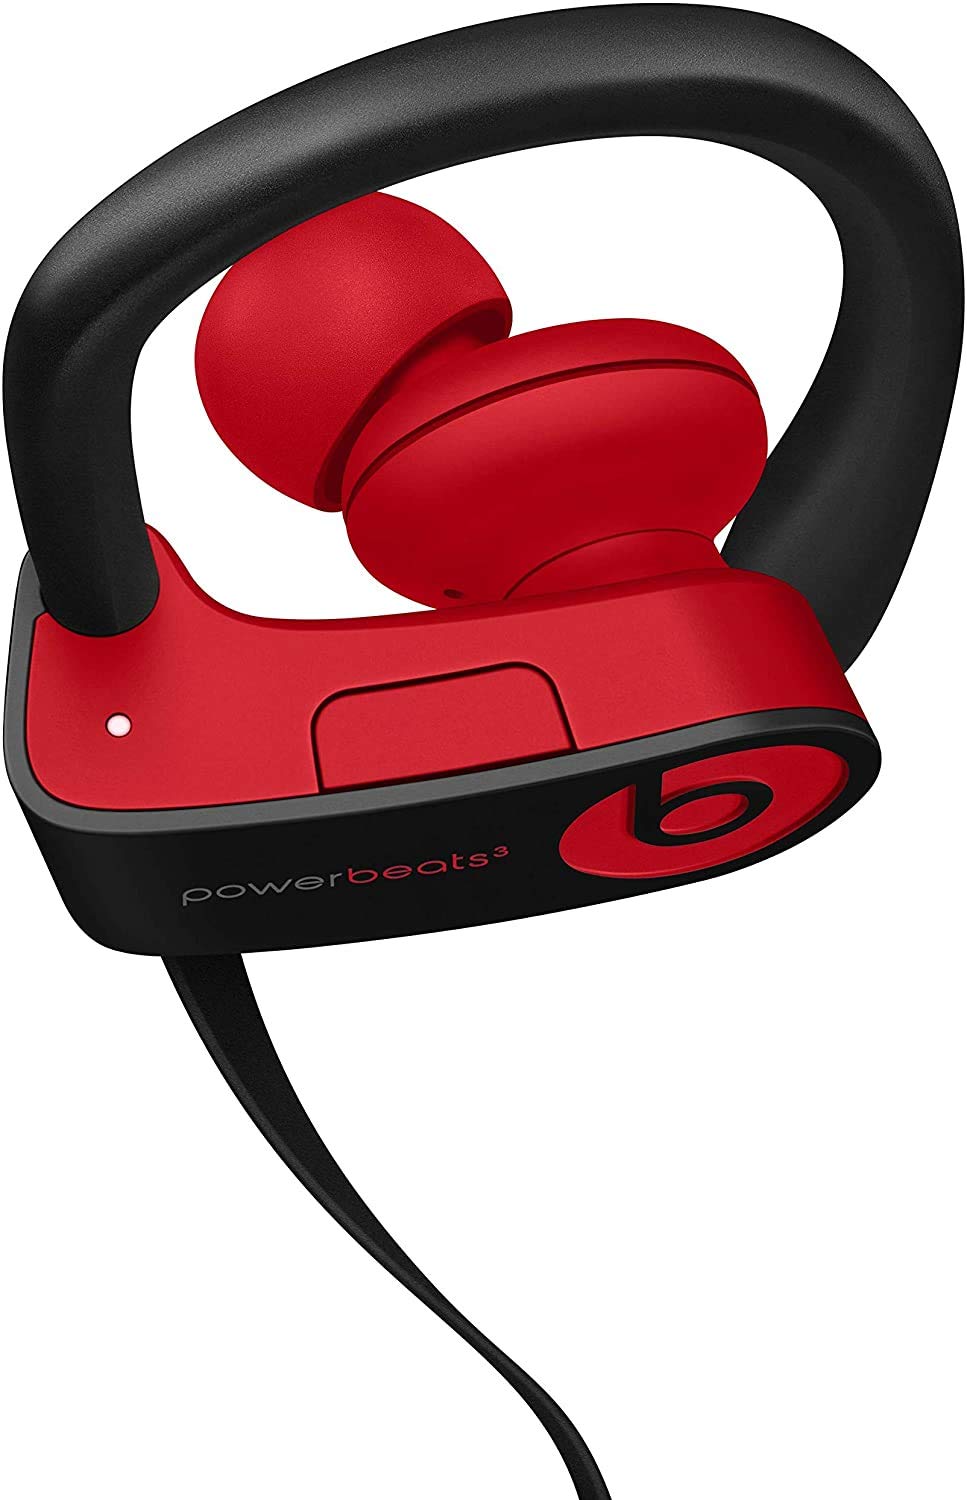 Powerbeats3 Wireless Earphones - Apple W1 Headphone Chip, Class 1 Bluetooth, 12 Hours of Listening Time, Sweat Resistant Earbuds - Defiant Black-Red